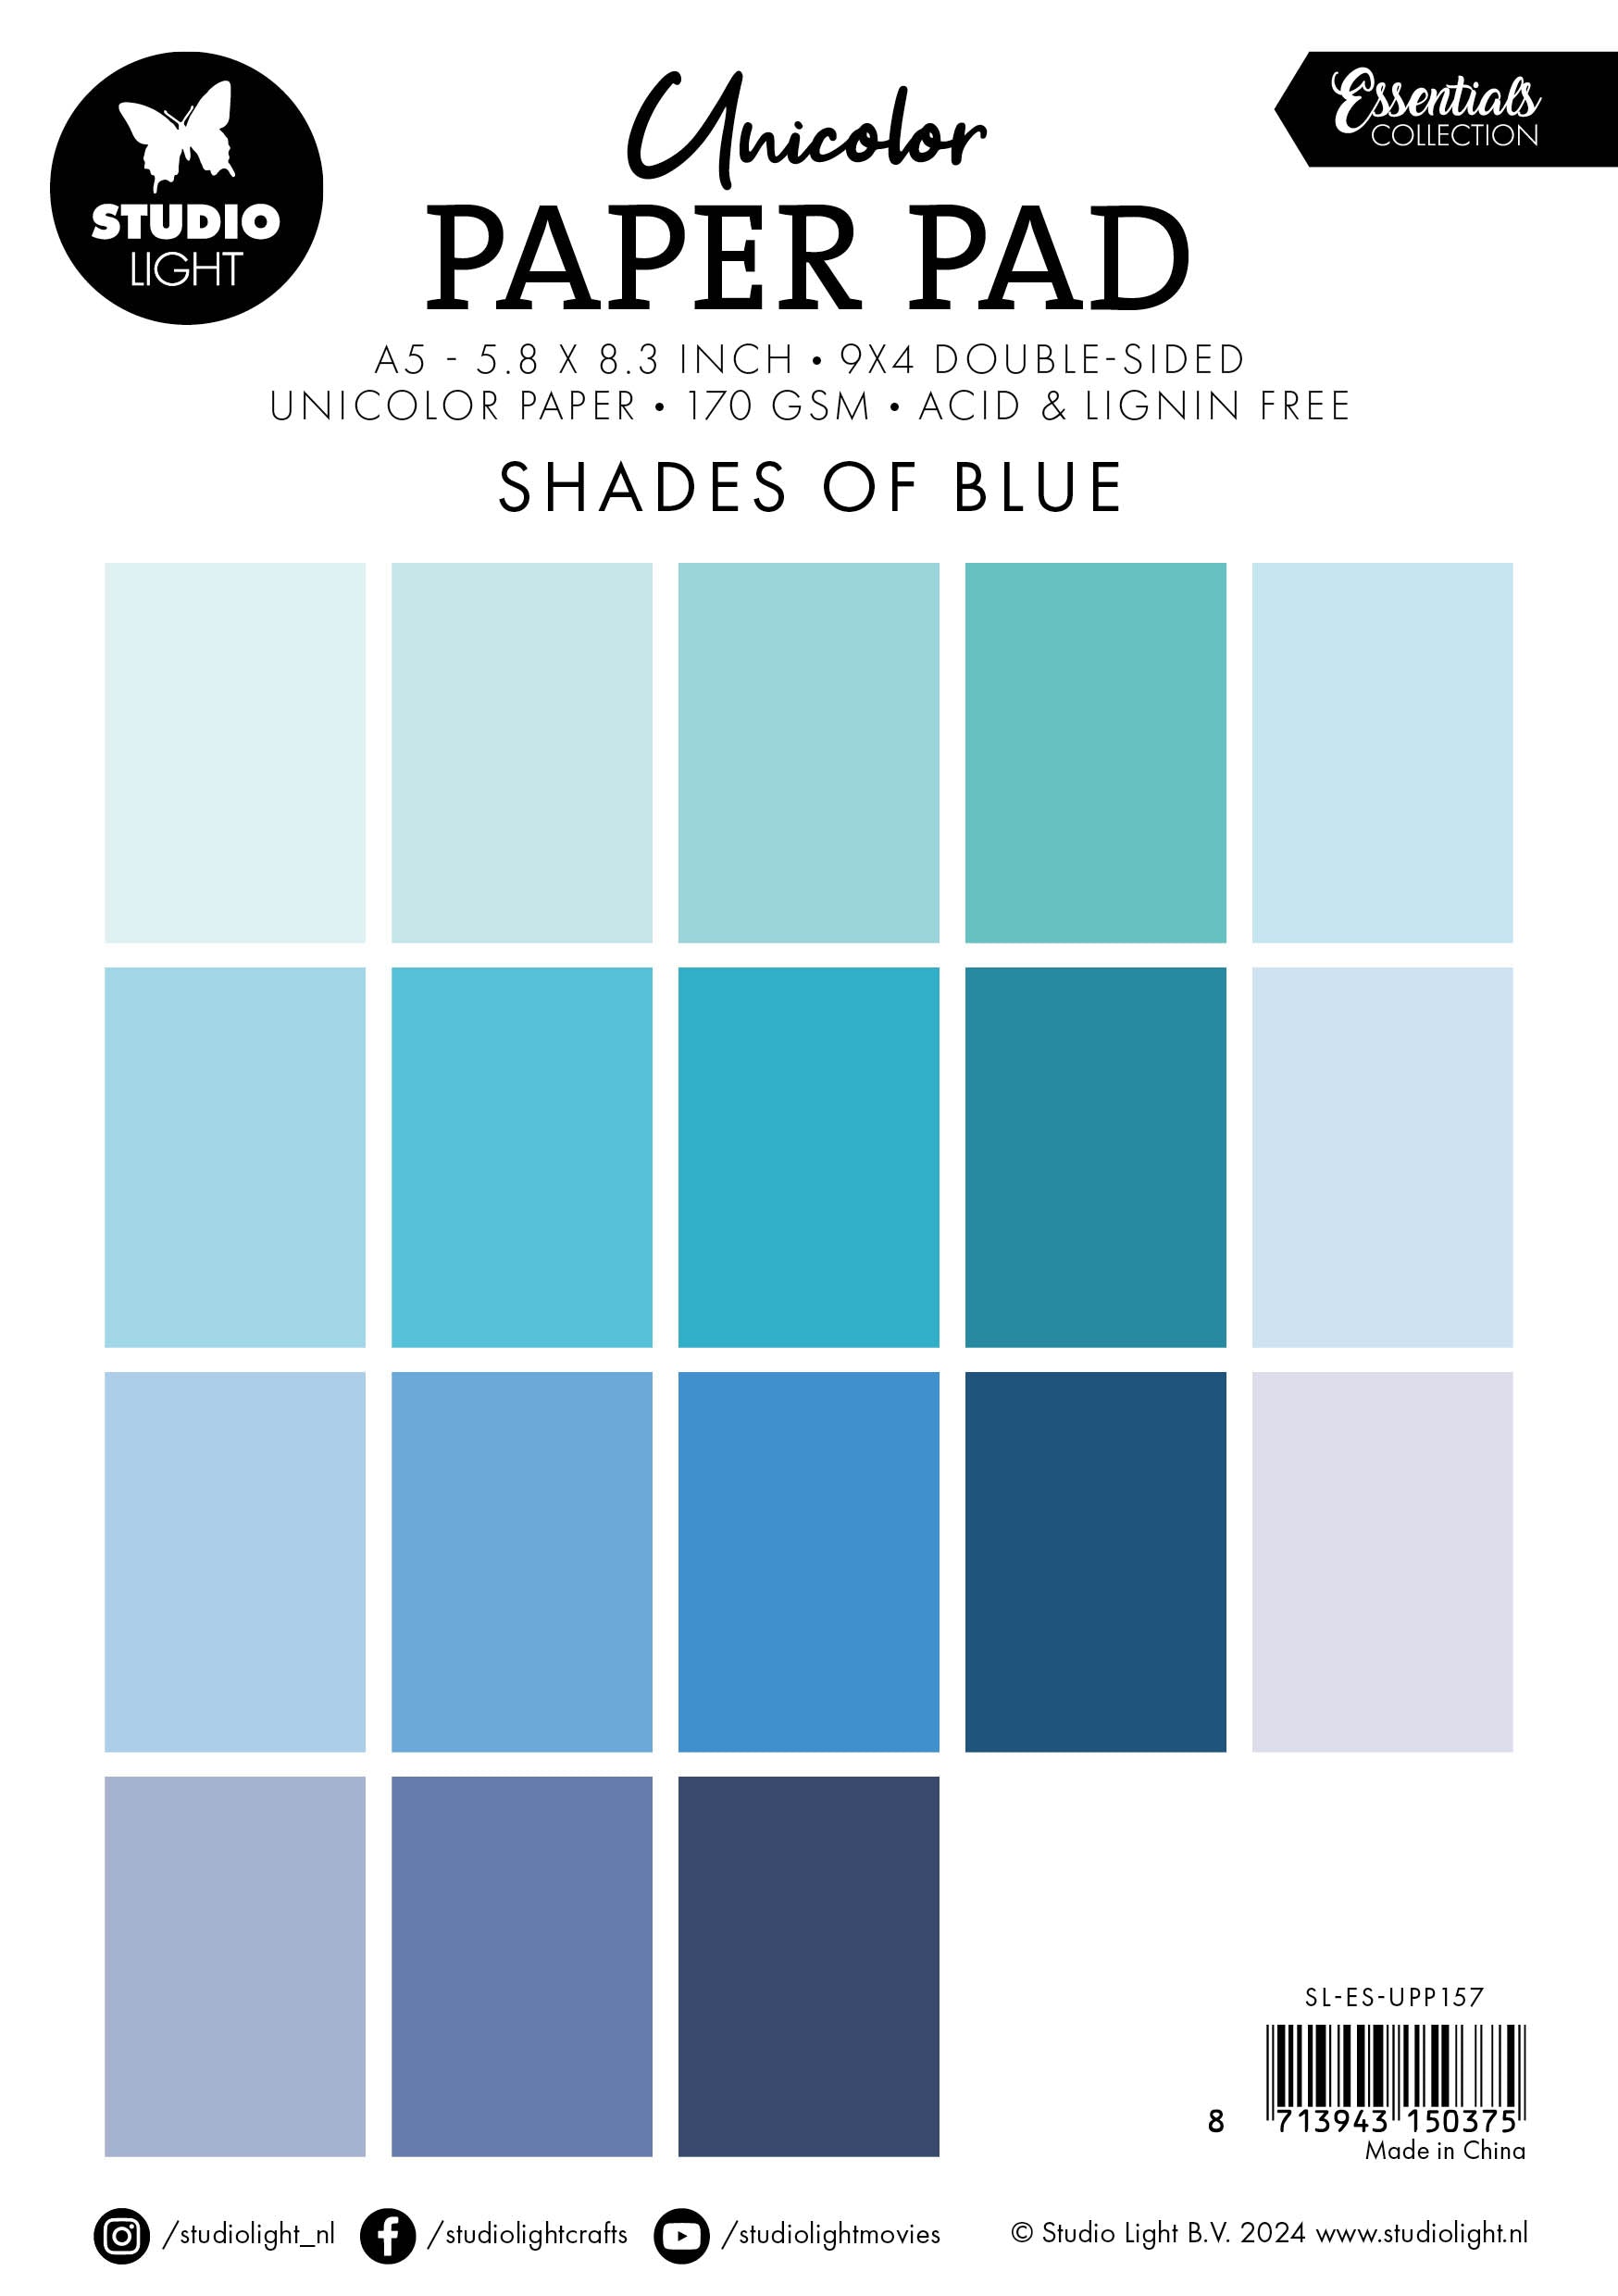 SL Unicolor Paper Pad Shades Of Blue Essentials 36 SH